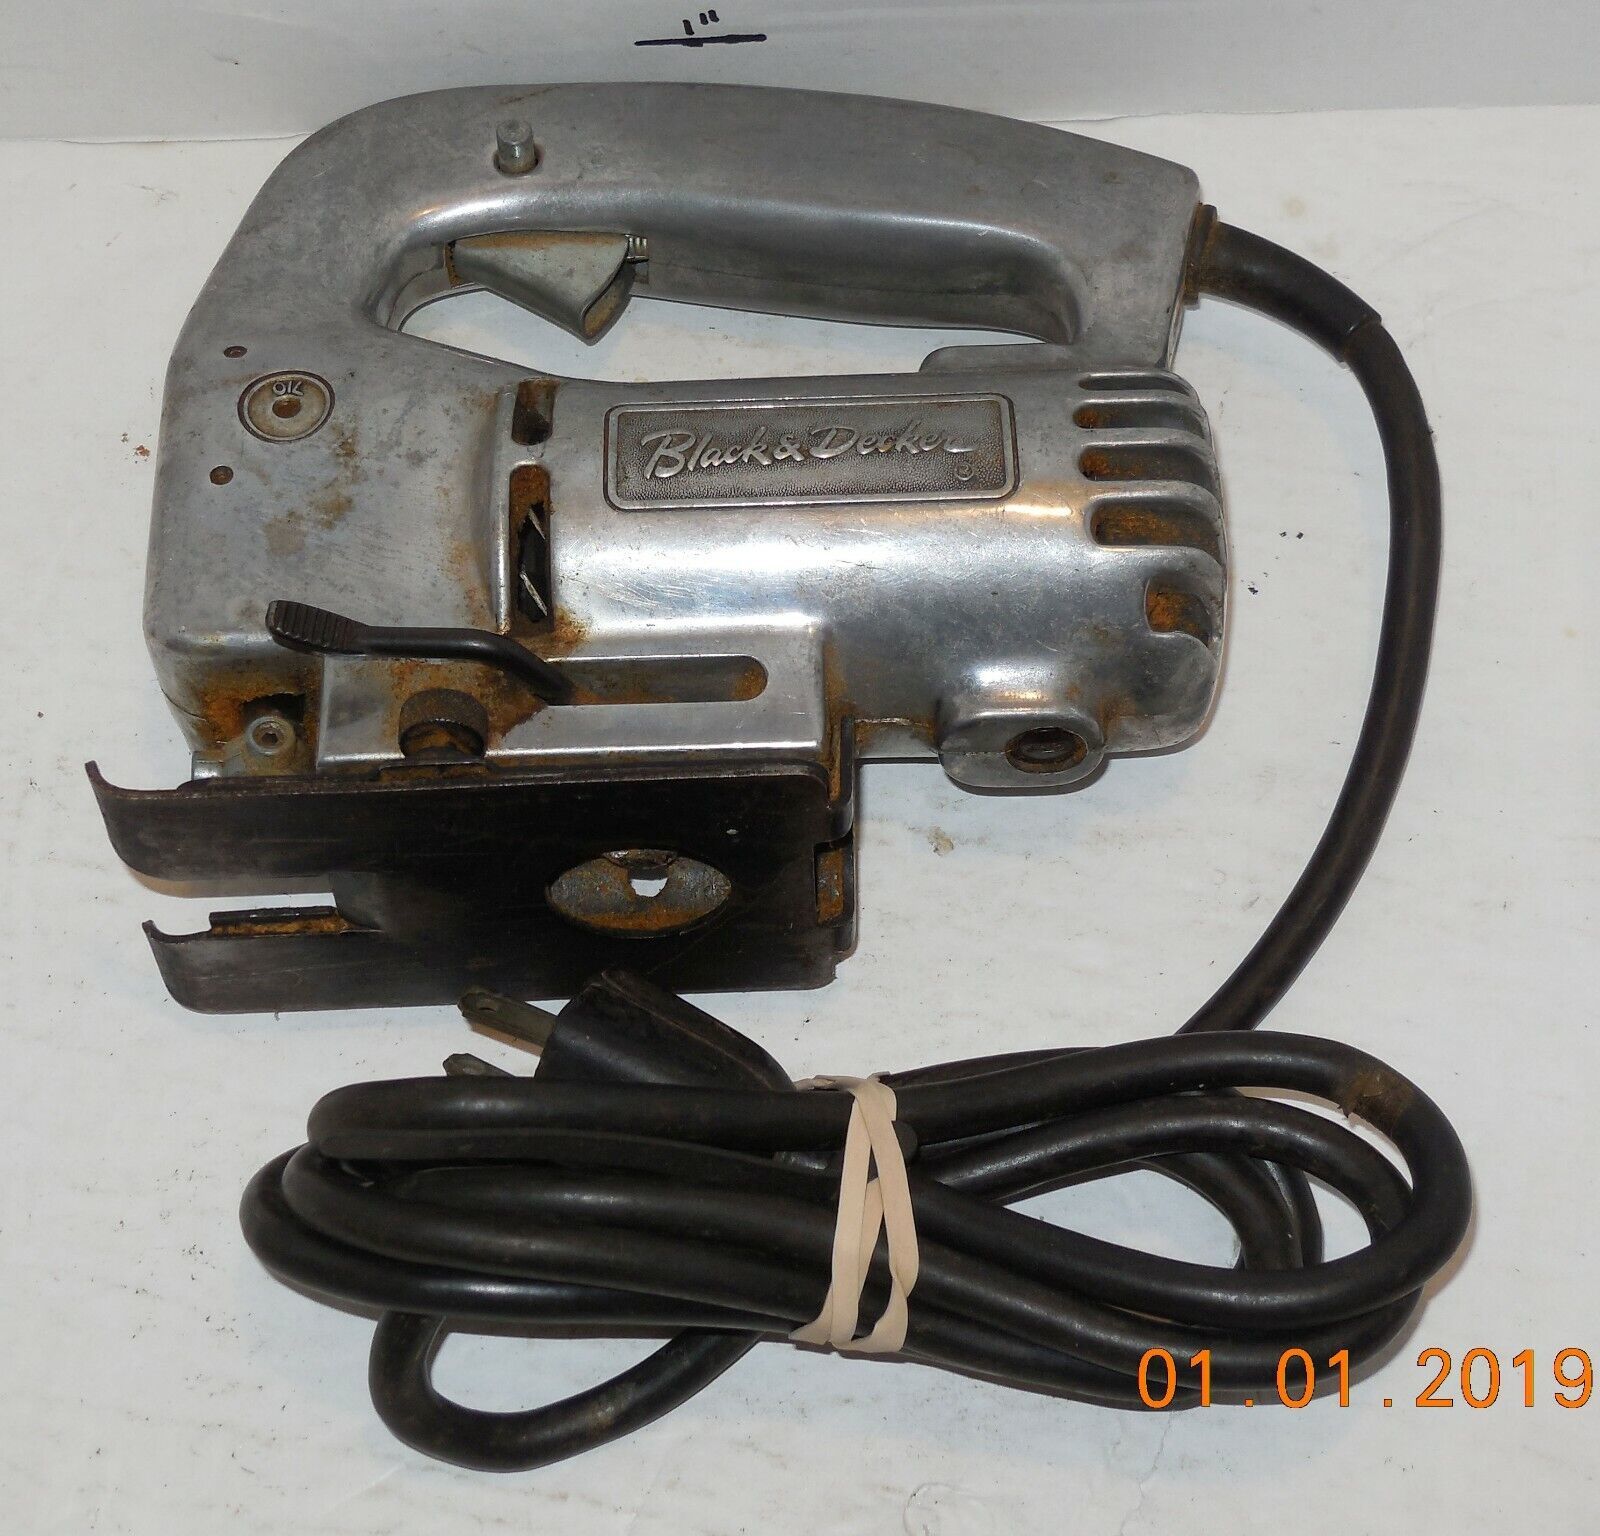 B + D Black and Decker Professional Jig Saw 2.5 Amps 3000 RPM Model U-351 - $48.27